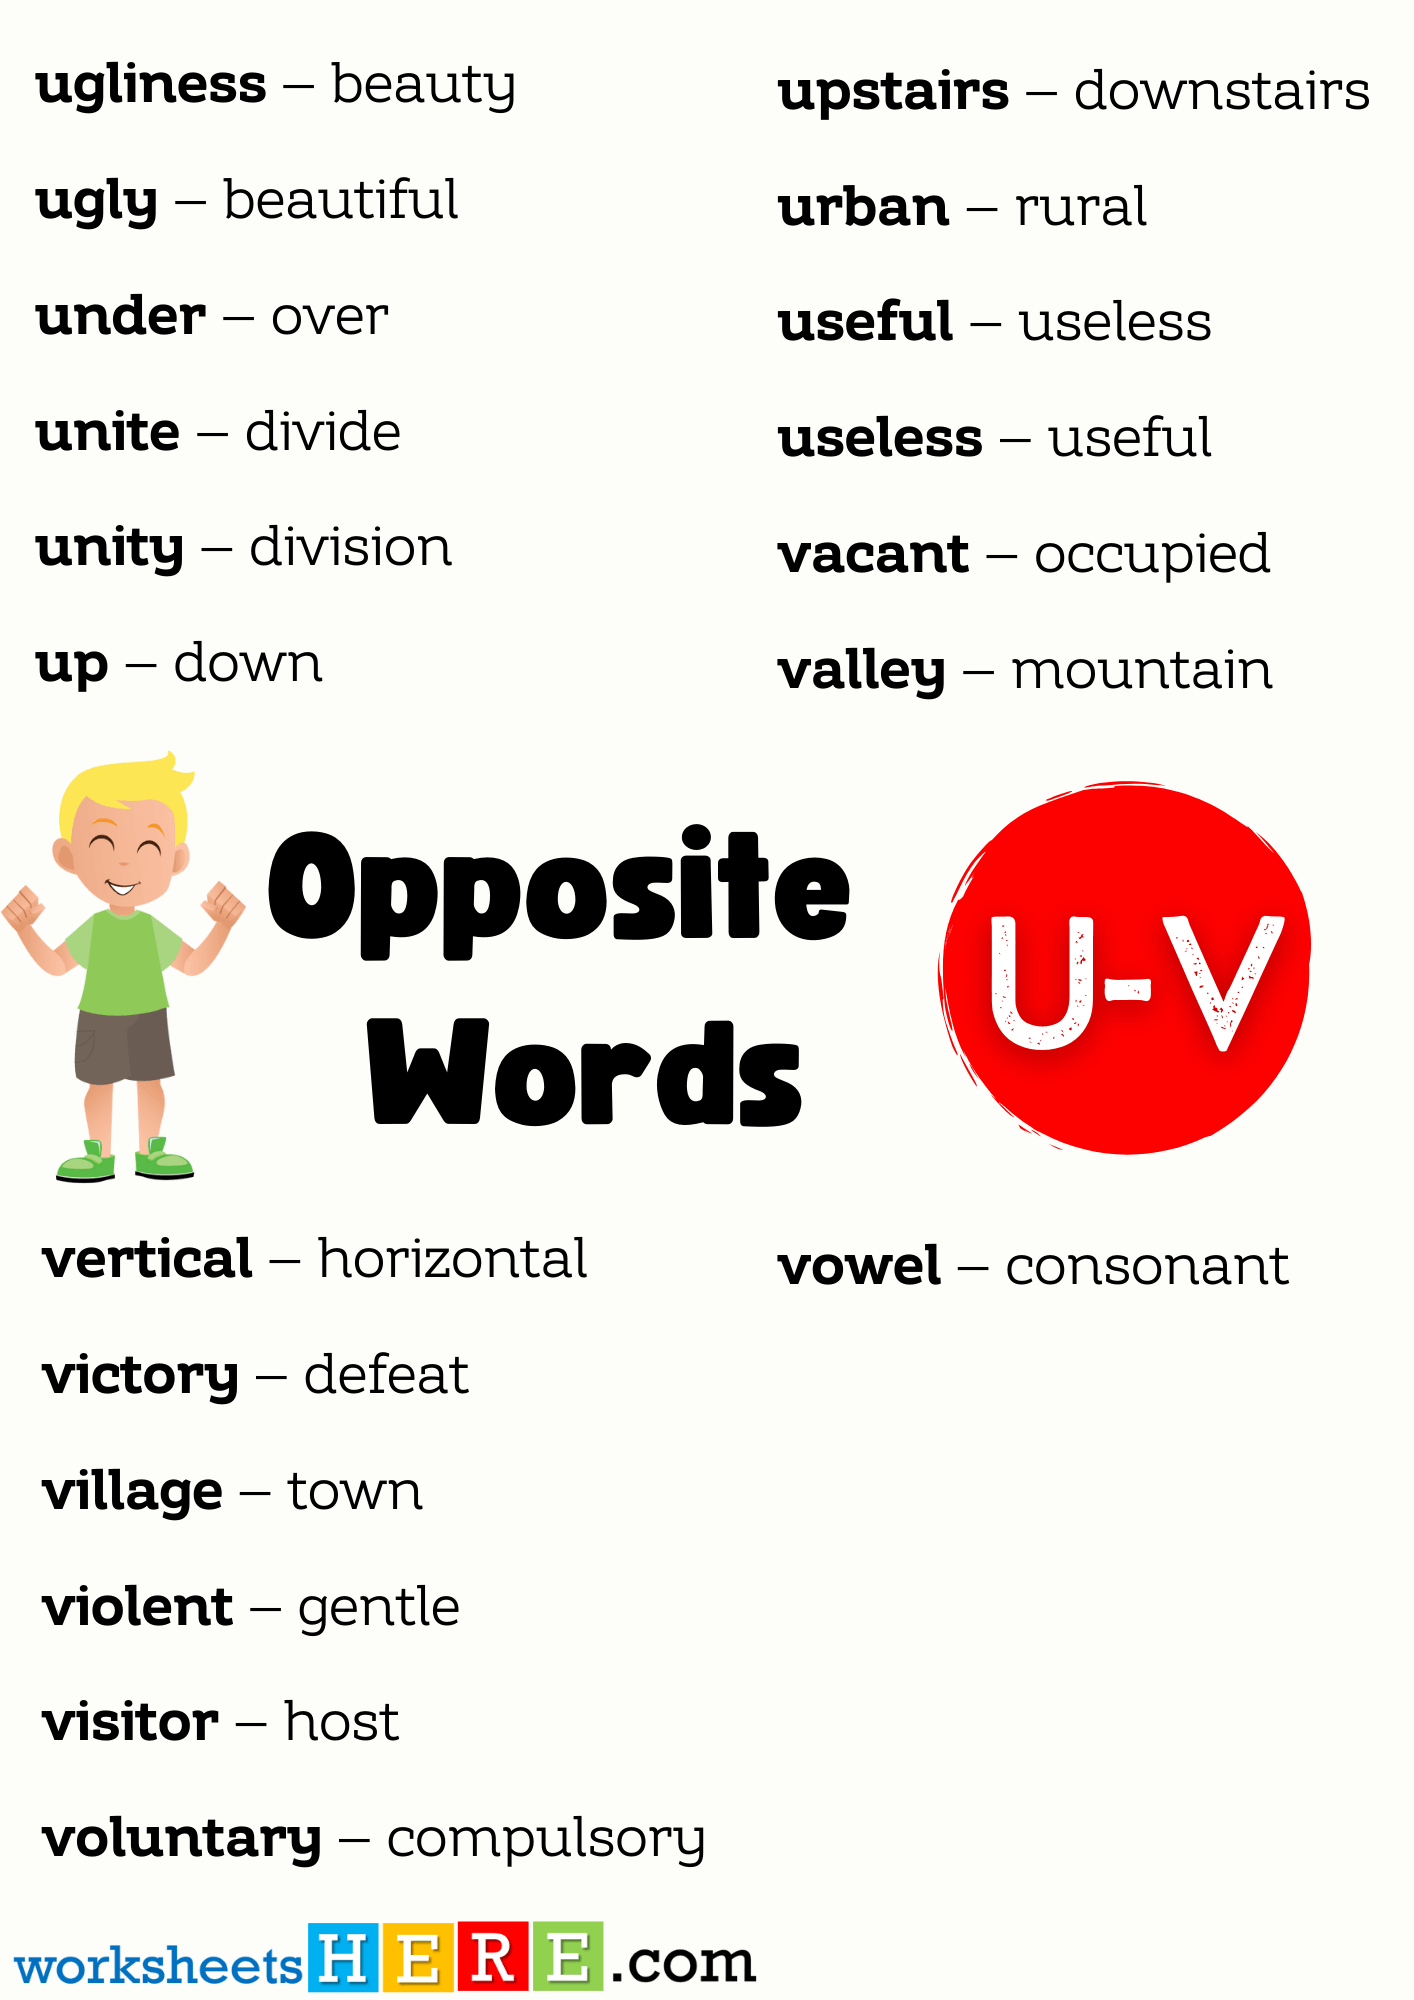 Opposite Words List Start with U, V PDF Worksheet For Students